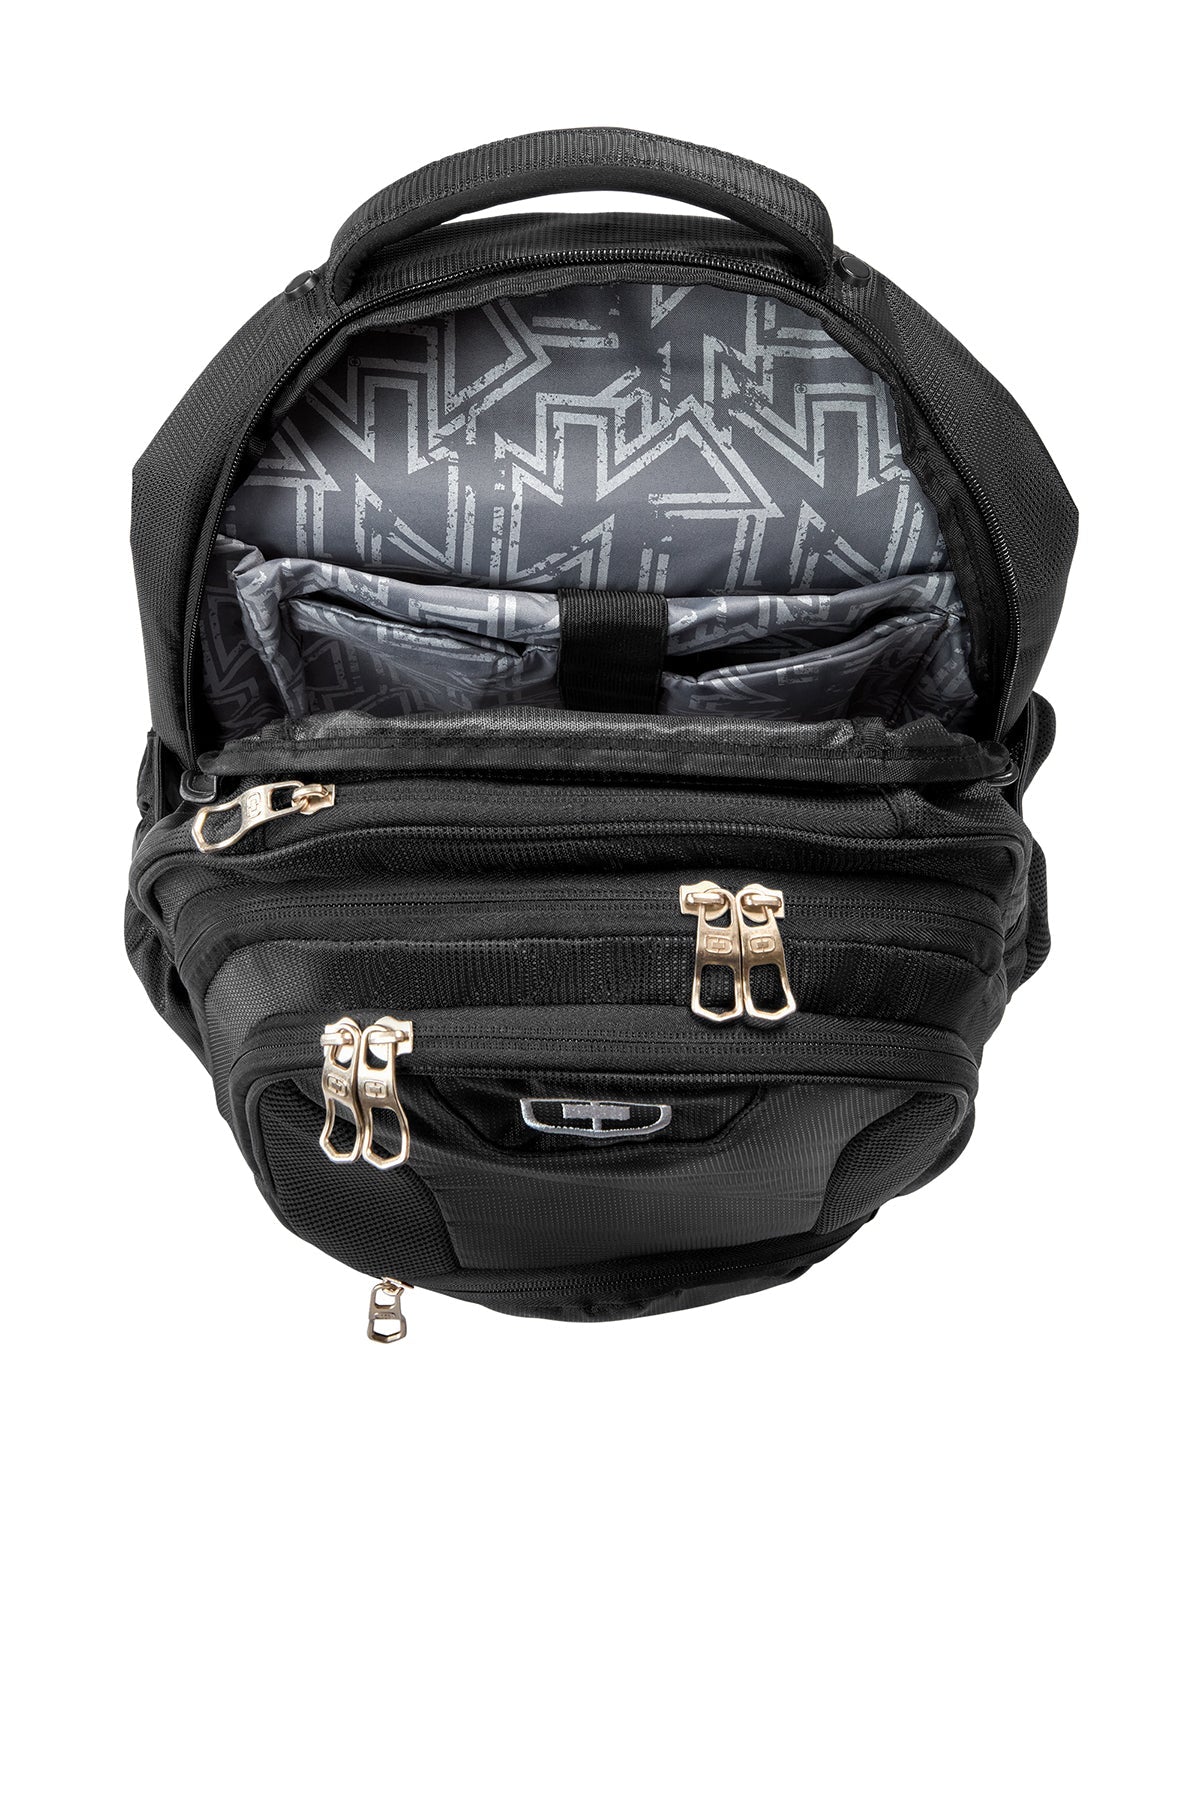 OGIO Bullion Customzied Backpacks, Black/Silver